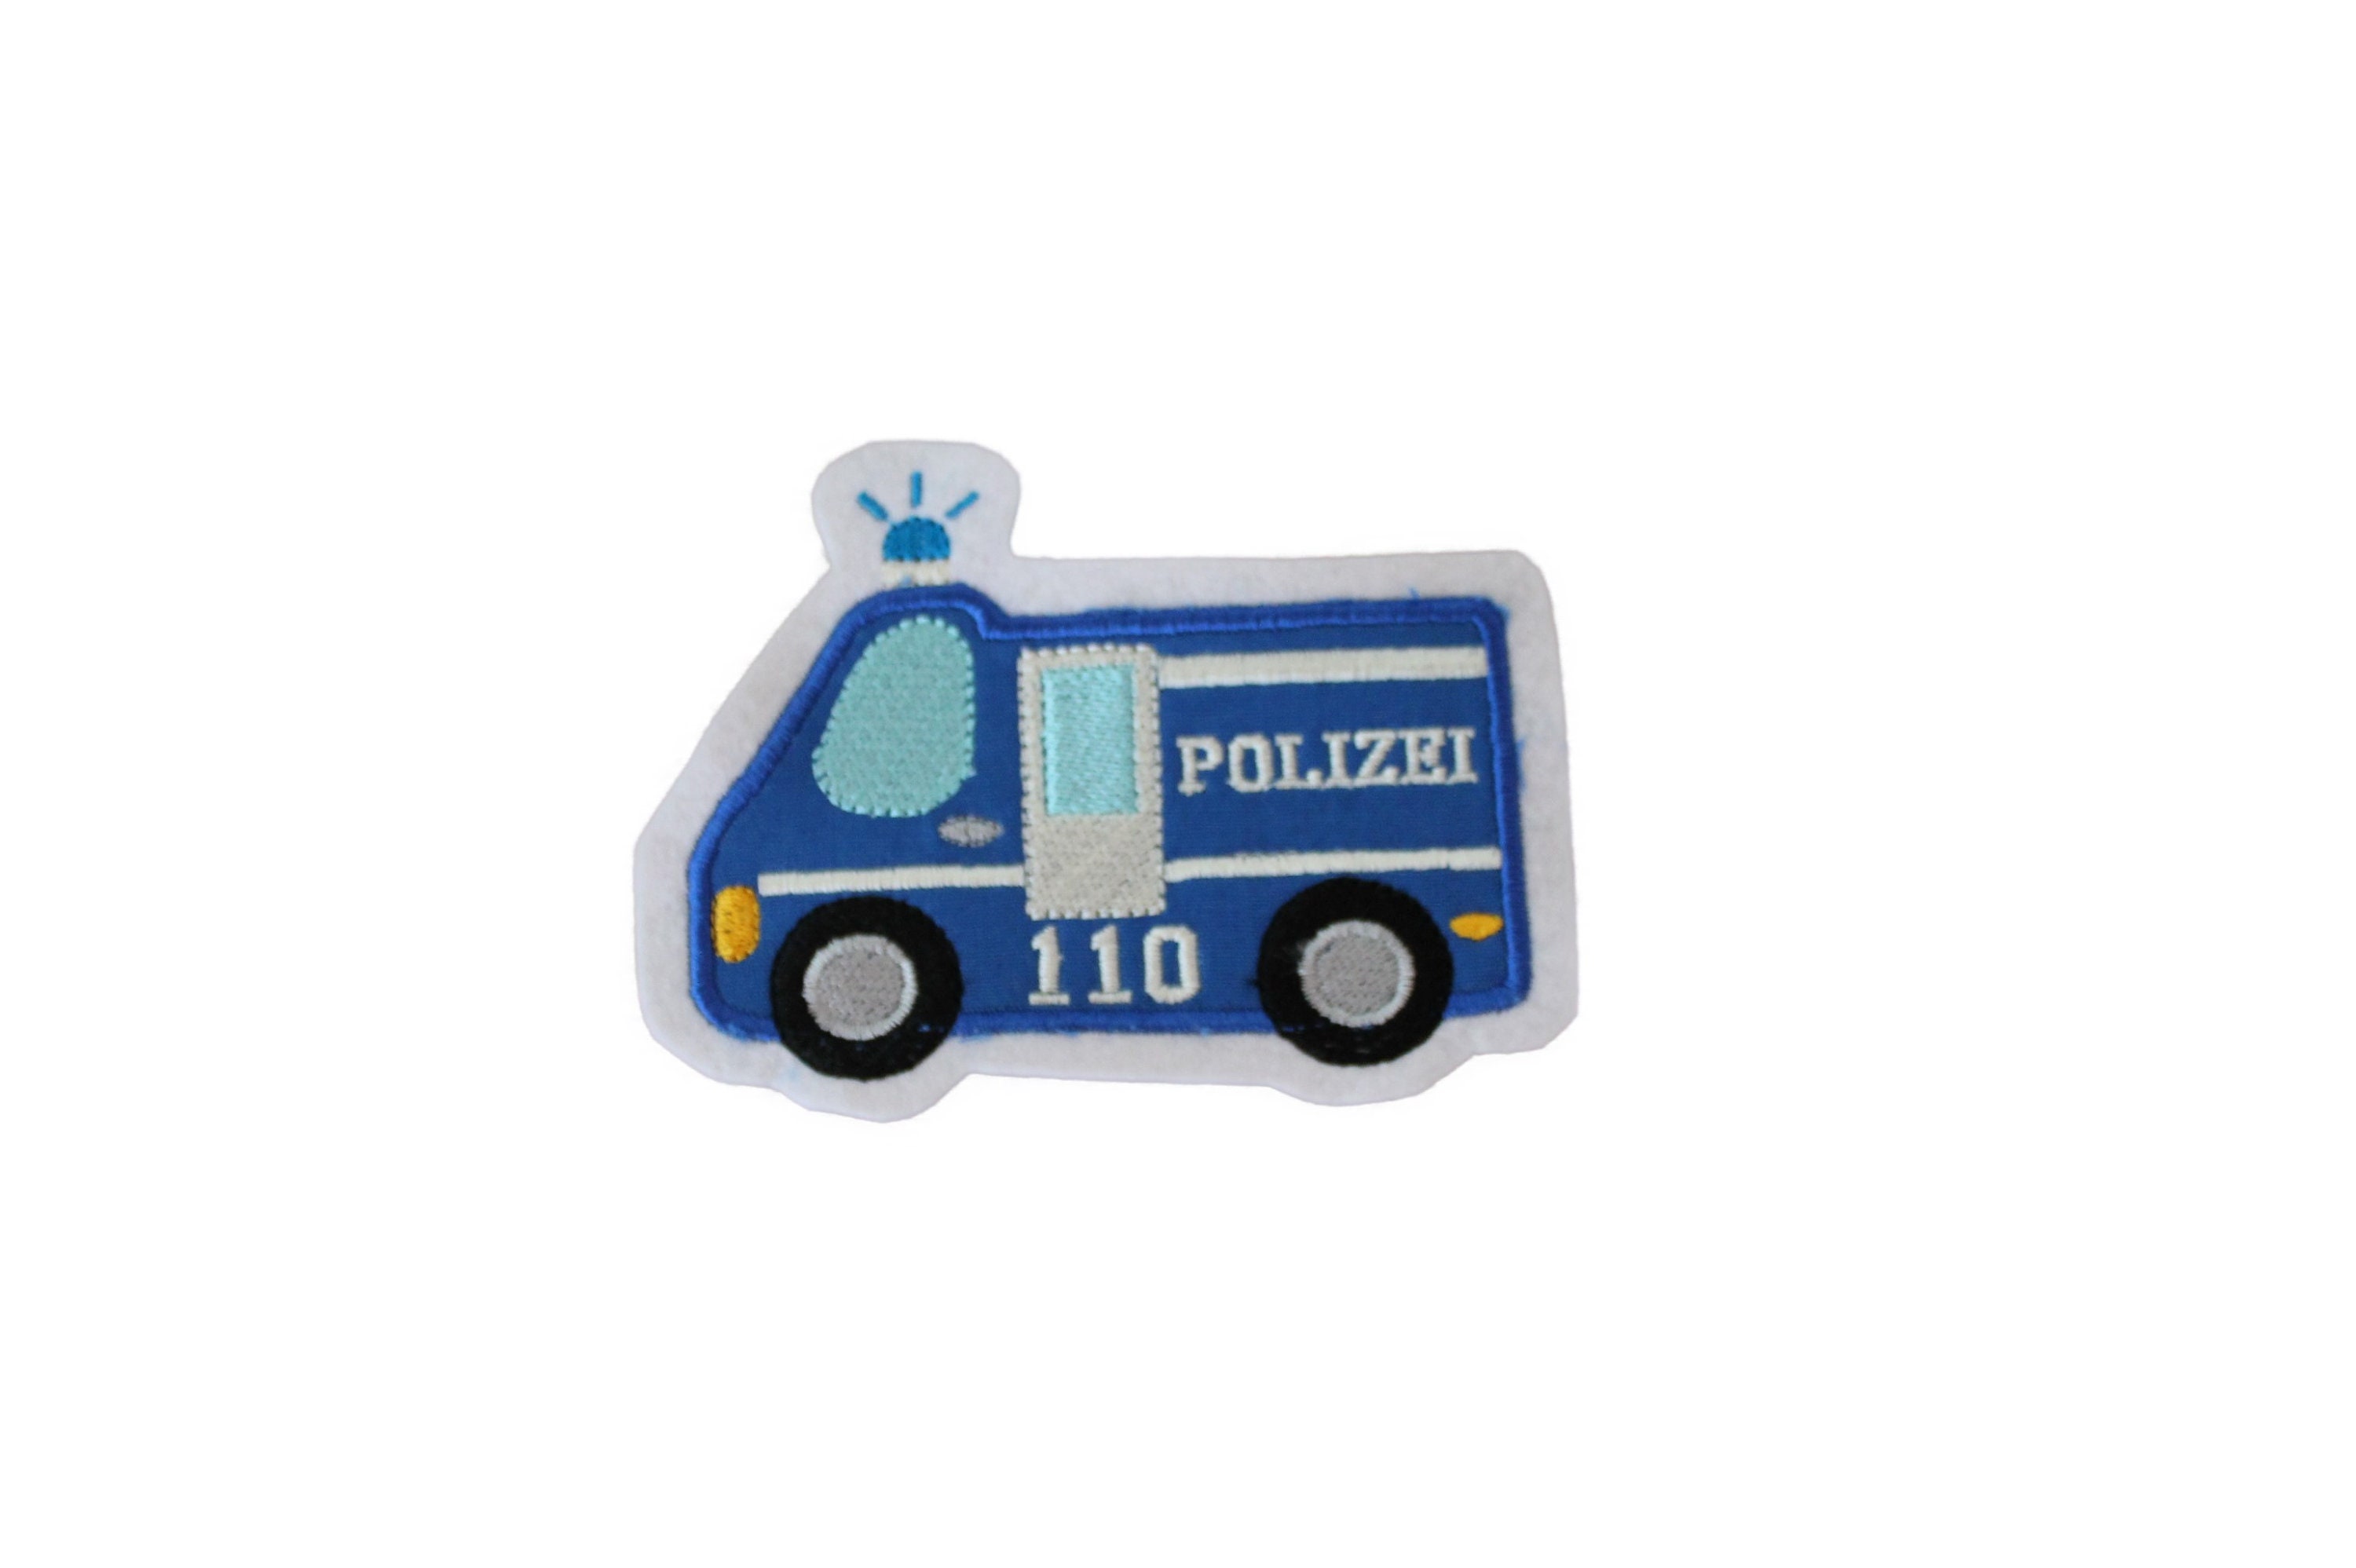 Police labels - .de